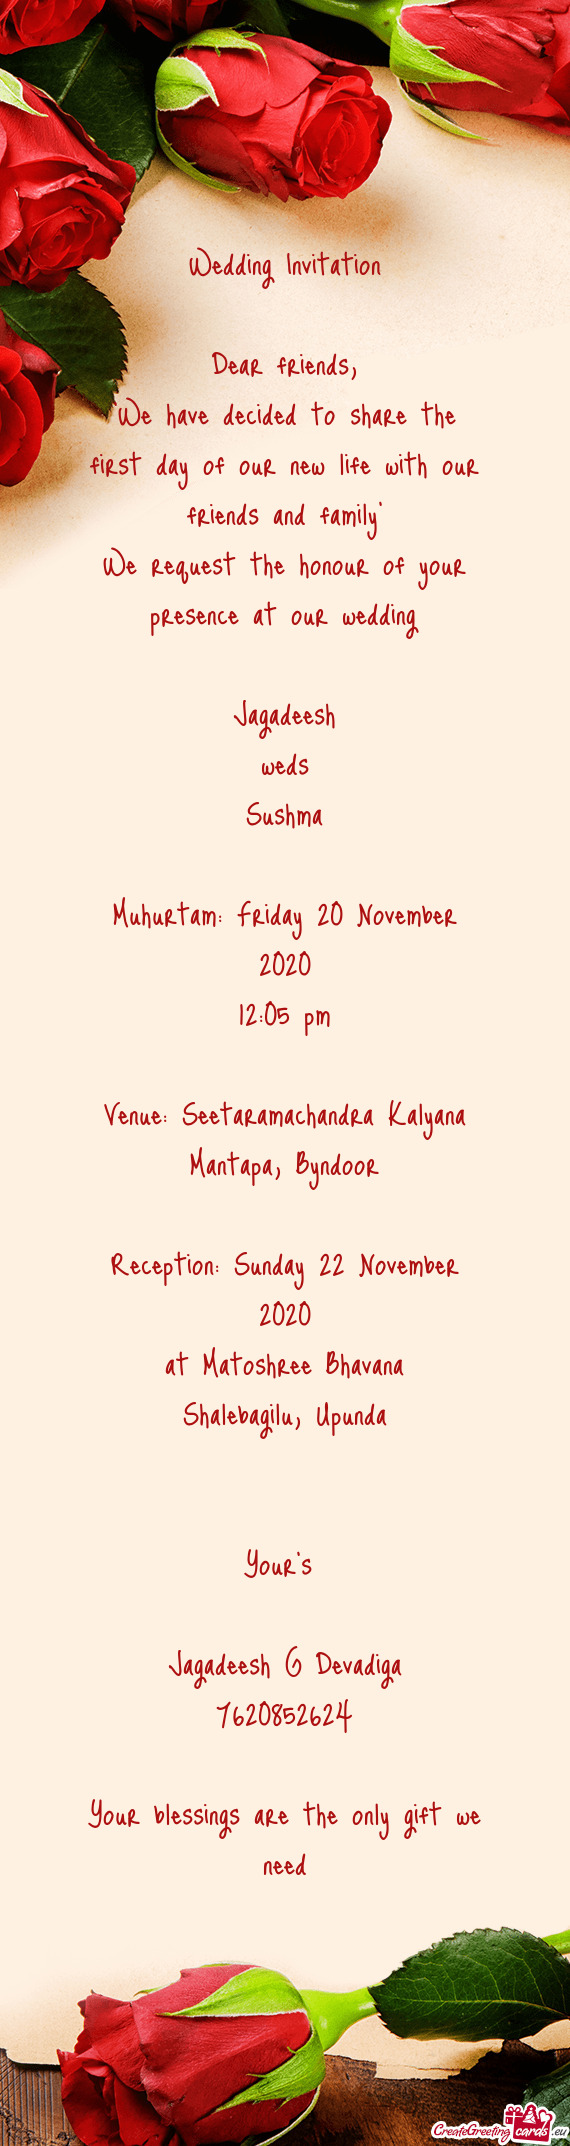 Reception: Sunday 22 November 2020